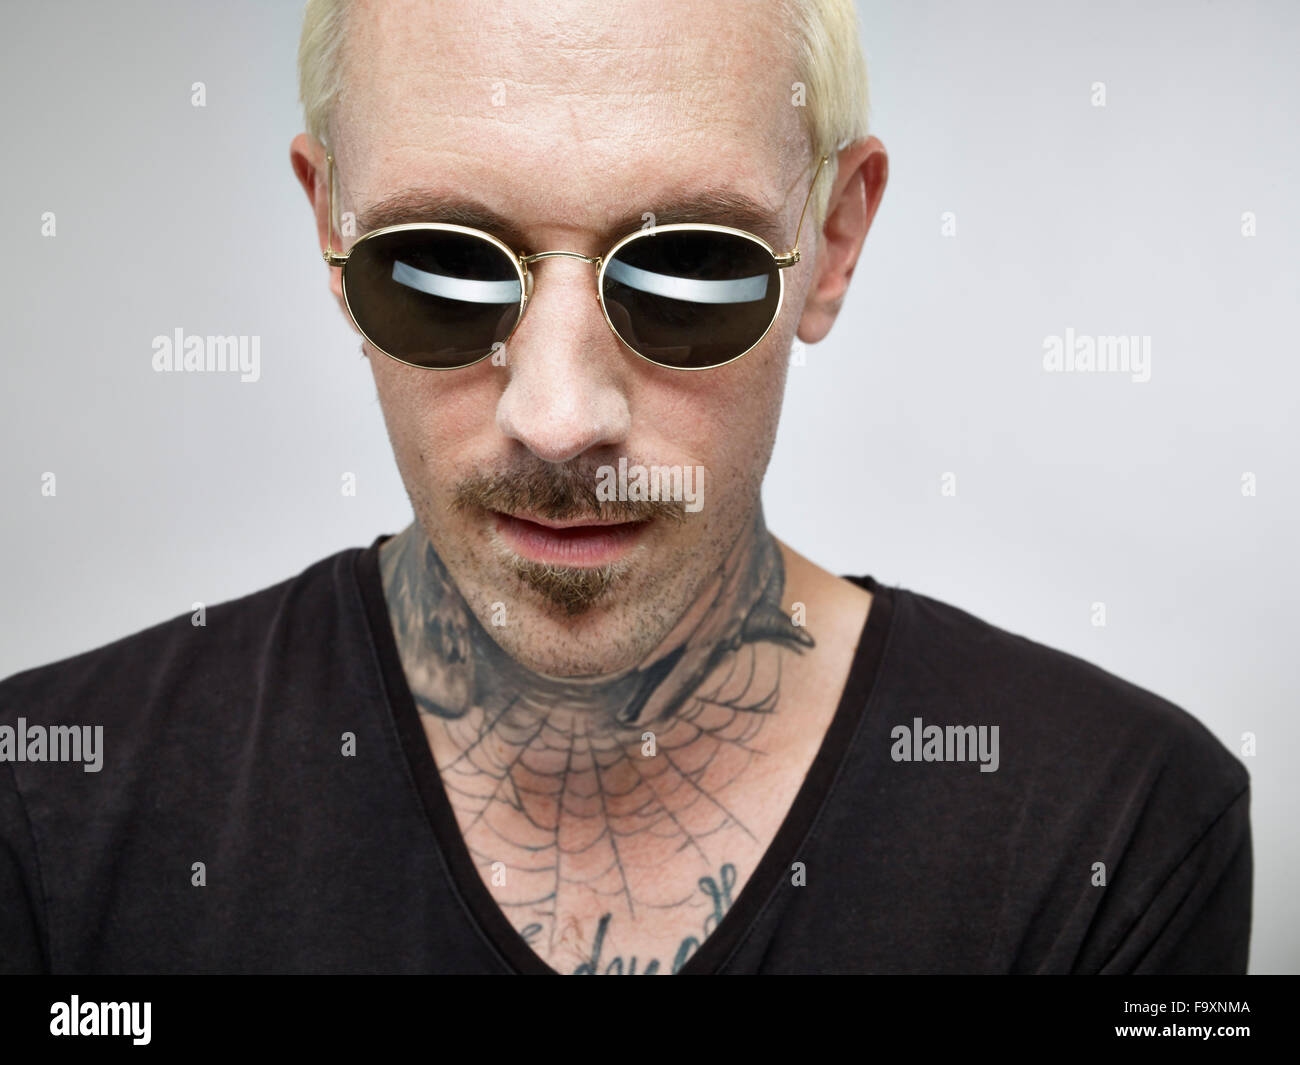 Portrait of man with tattoo et cheveux teints blonde wearing sunglasses Banque D'Images